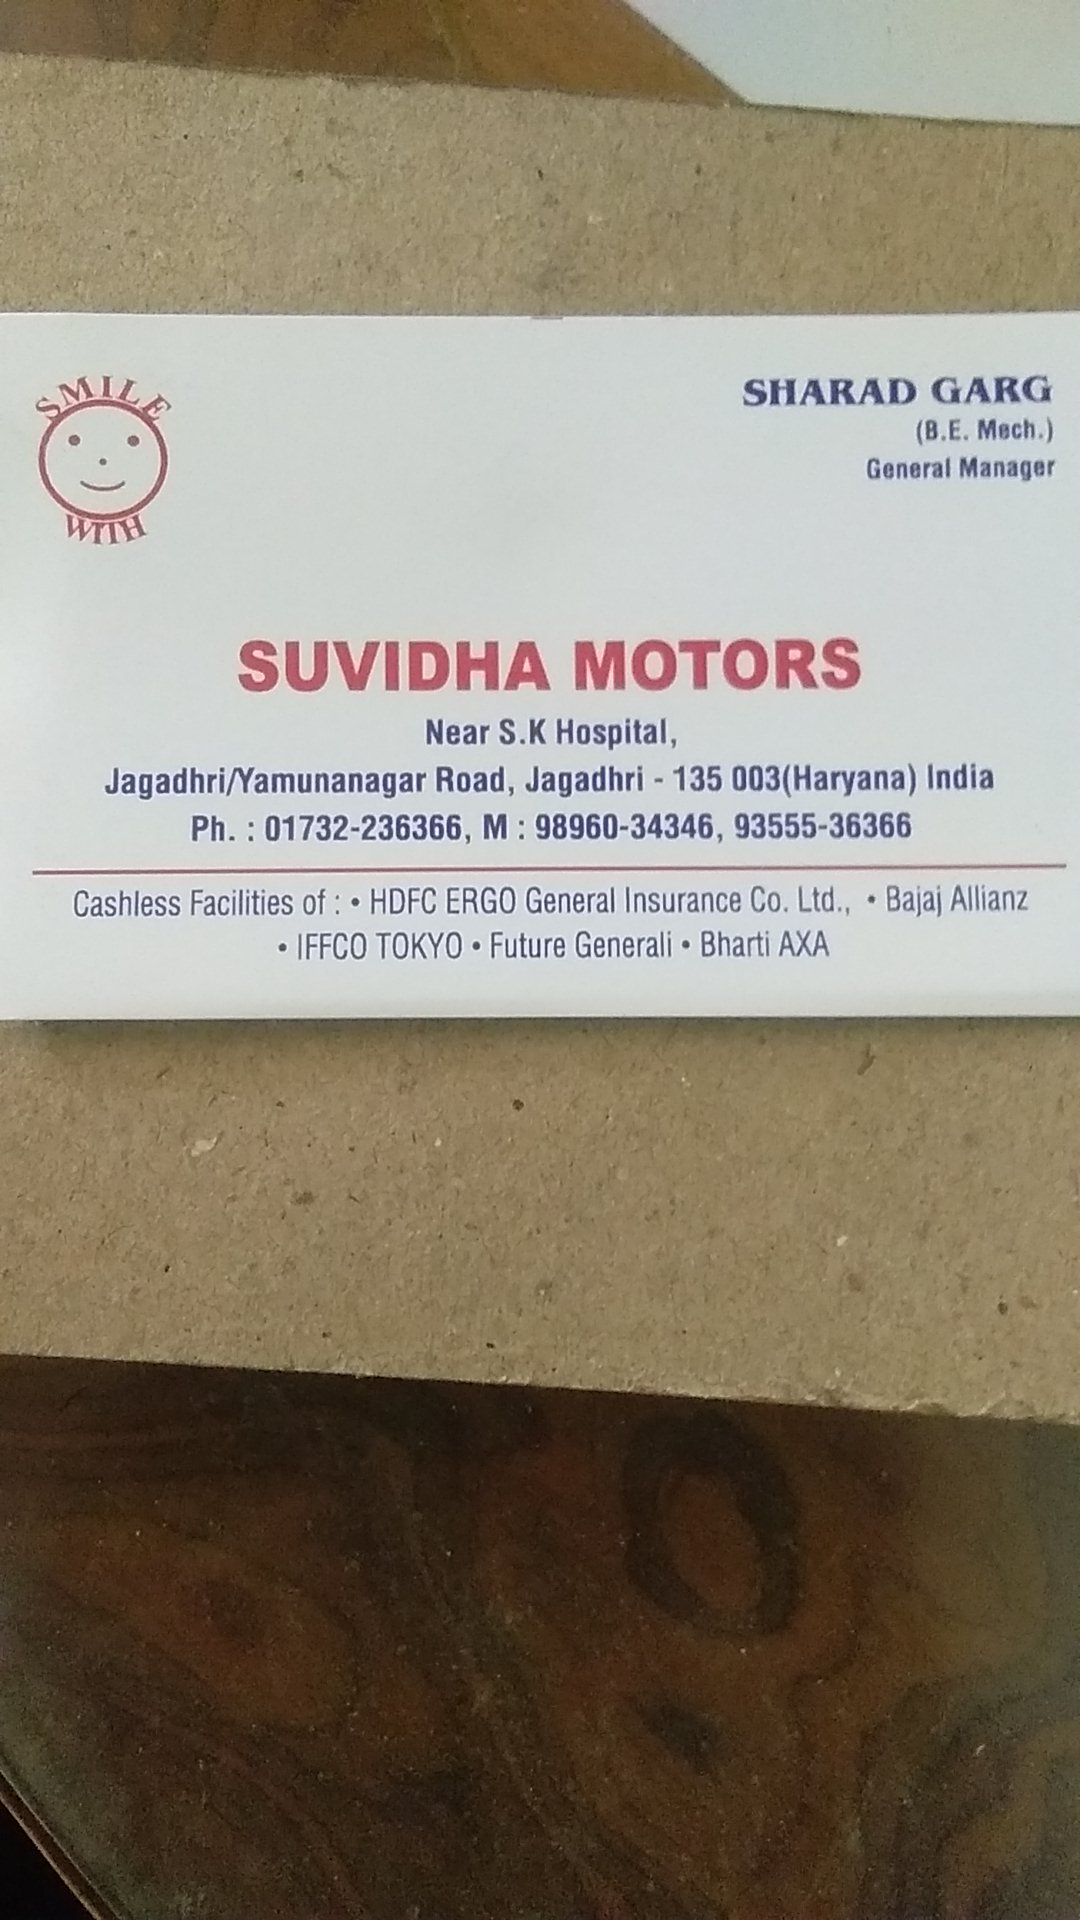 SUVIDHA Motors